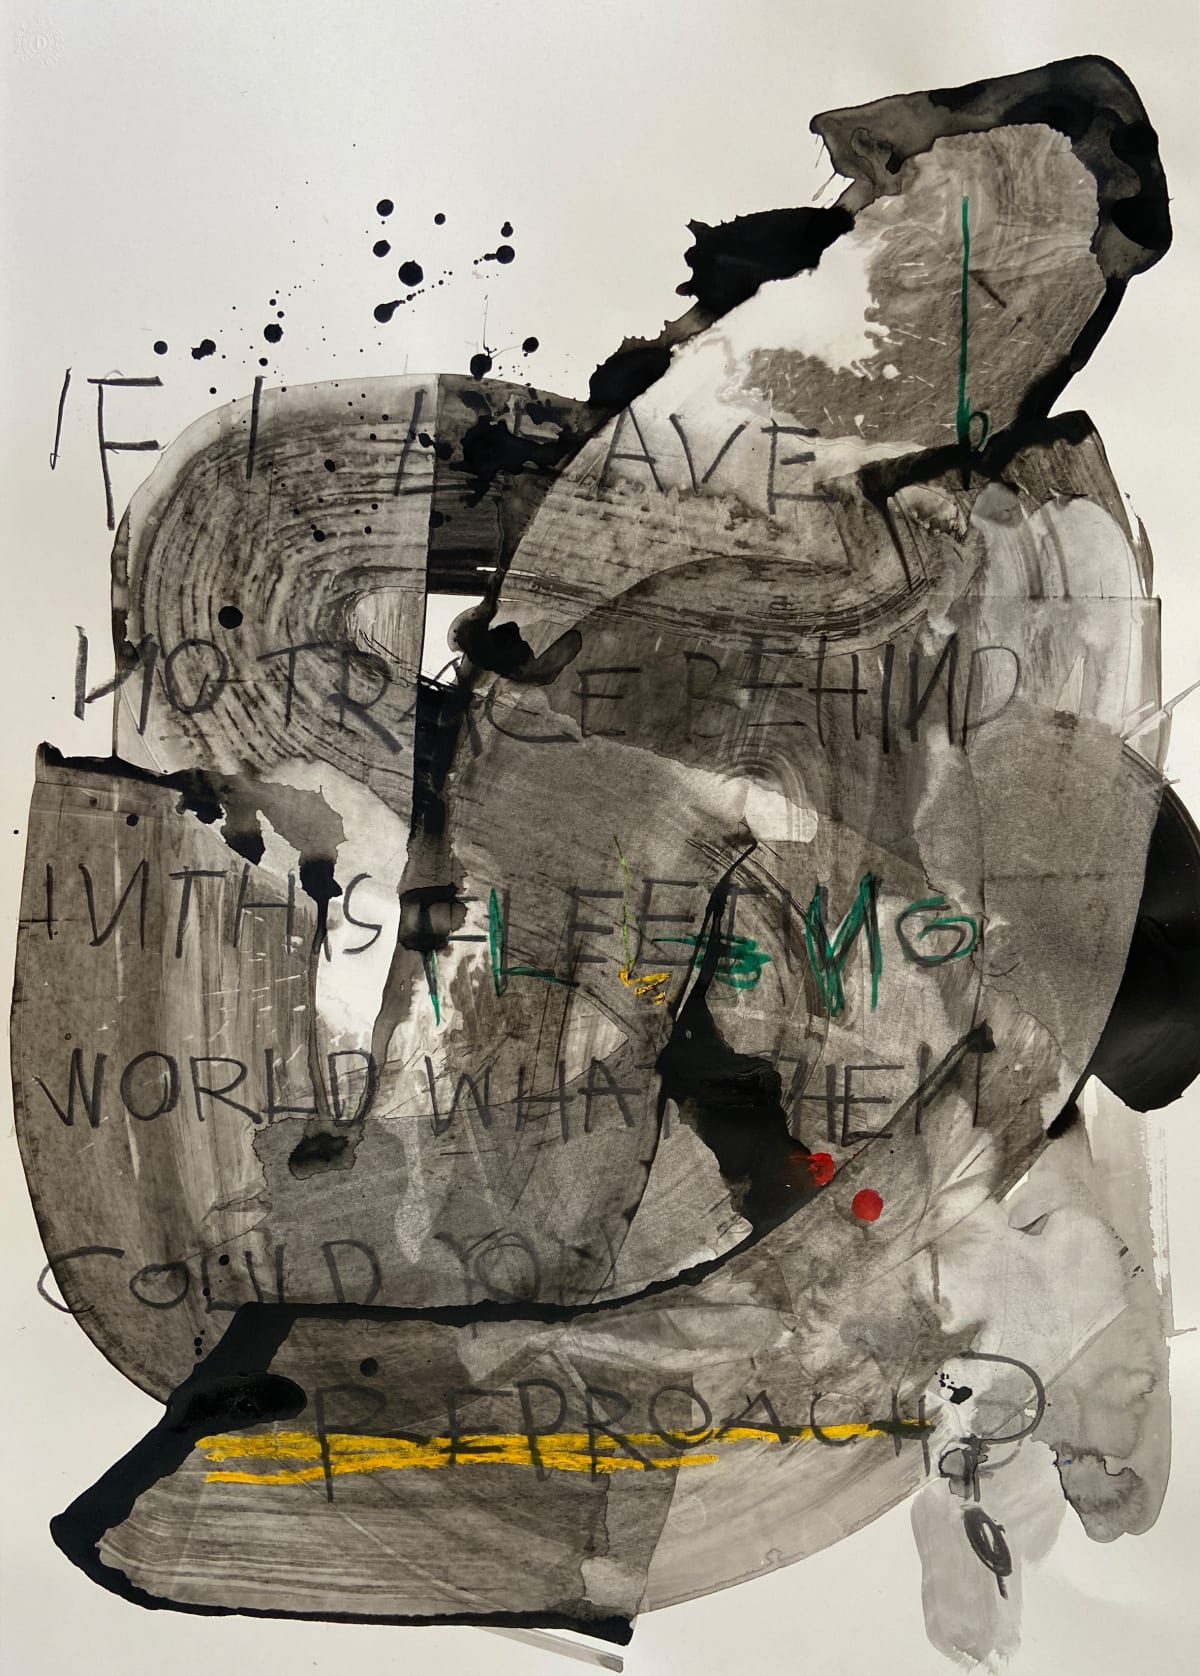 Douglas Diaz, 'Leave No Trace', 2021, mixed media on paper, 70 x 50 cm